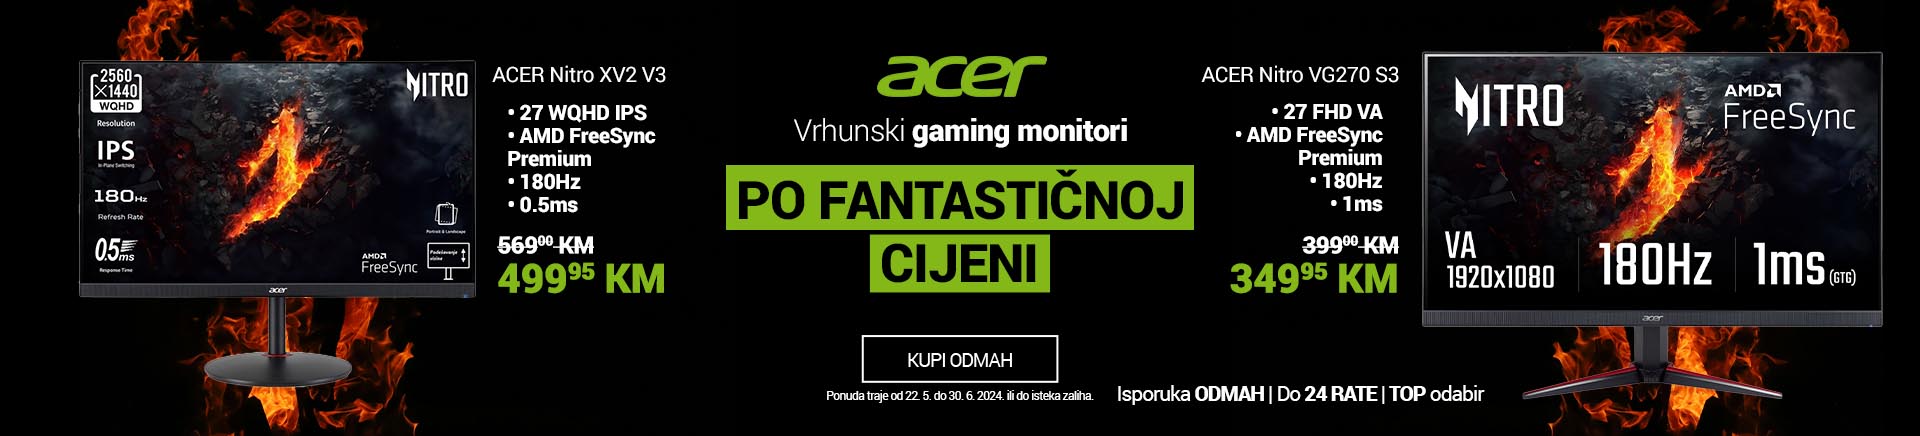 BA Gaming Monitori ACER Nitro MOBILE 760x872.jpg